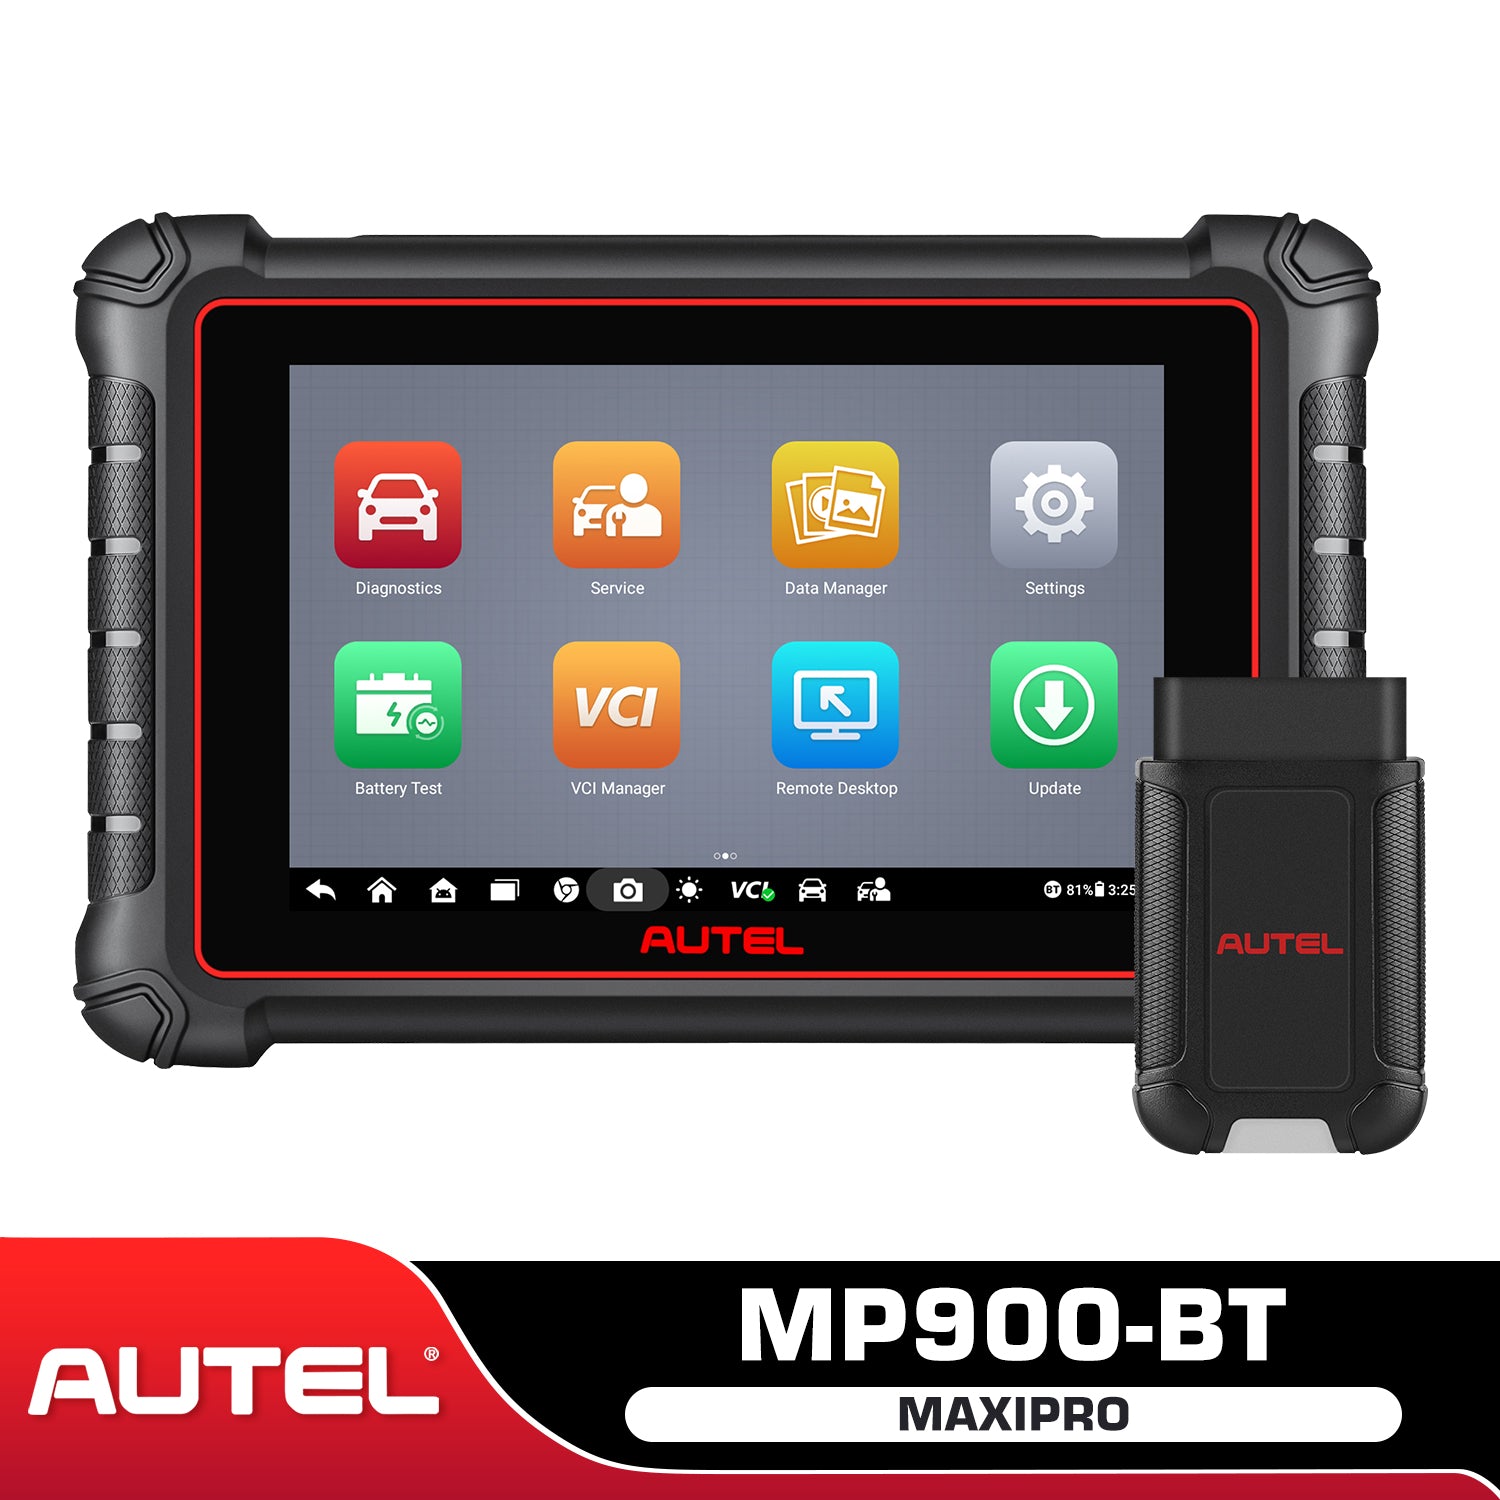 Autel Maxipro mp900bt mp900-bt